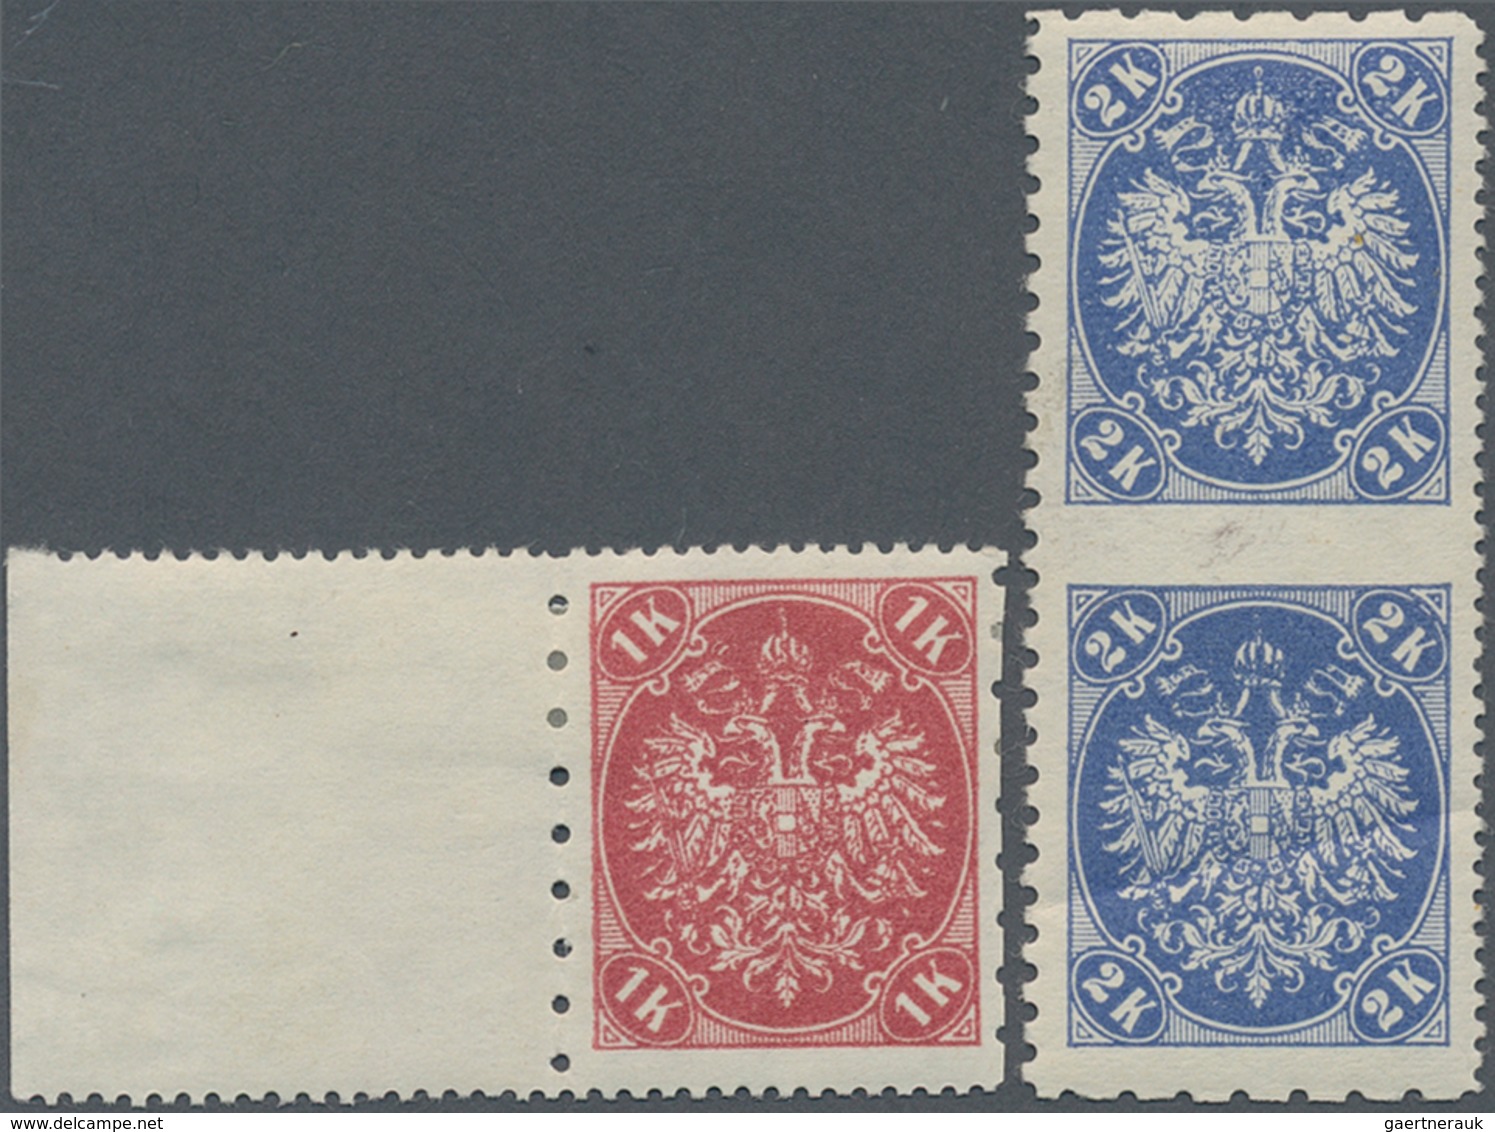 Bosnien Und Herzegowina: 1900, Definitives "Double Eagle", 1kr. Rose And 2 Kr. Ultramarine, Speciali - Bosnie-Herzegovine